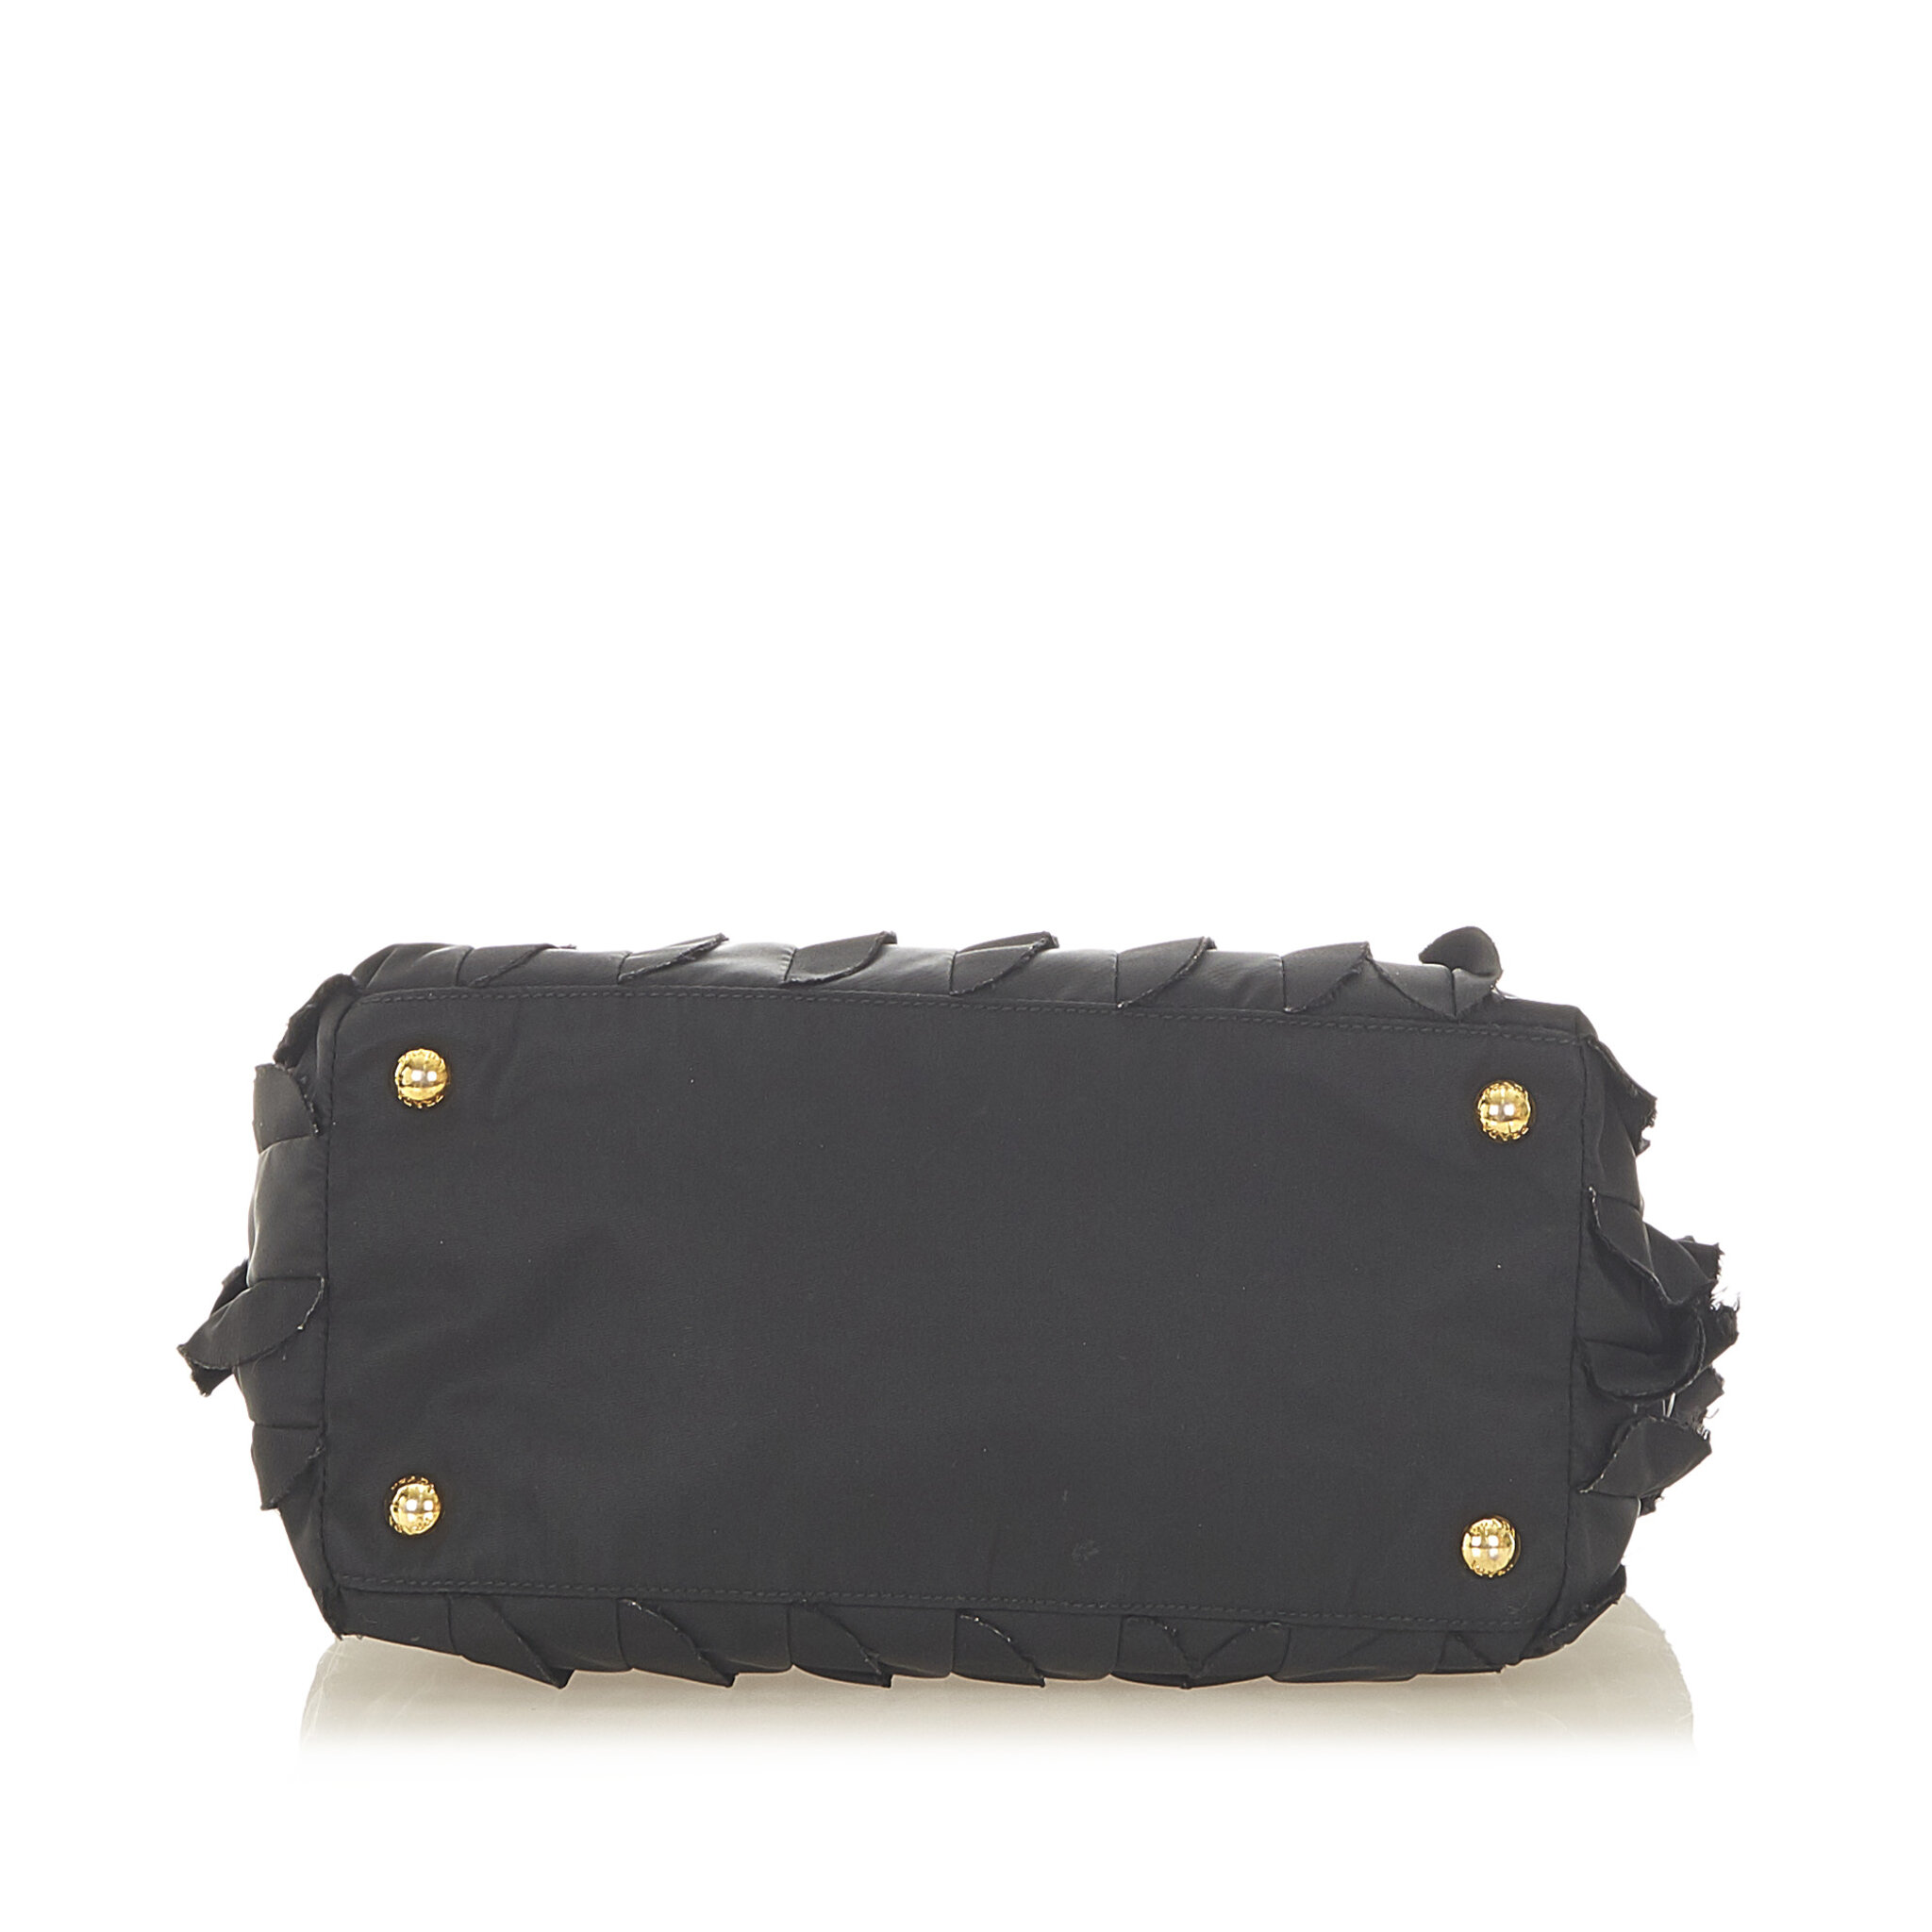 Prada Ruffled Tessuto Tote Bag, black